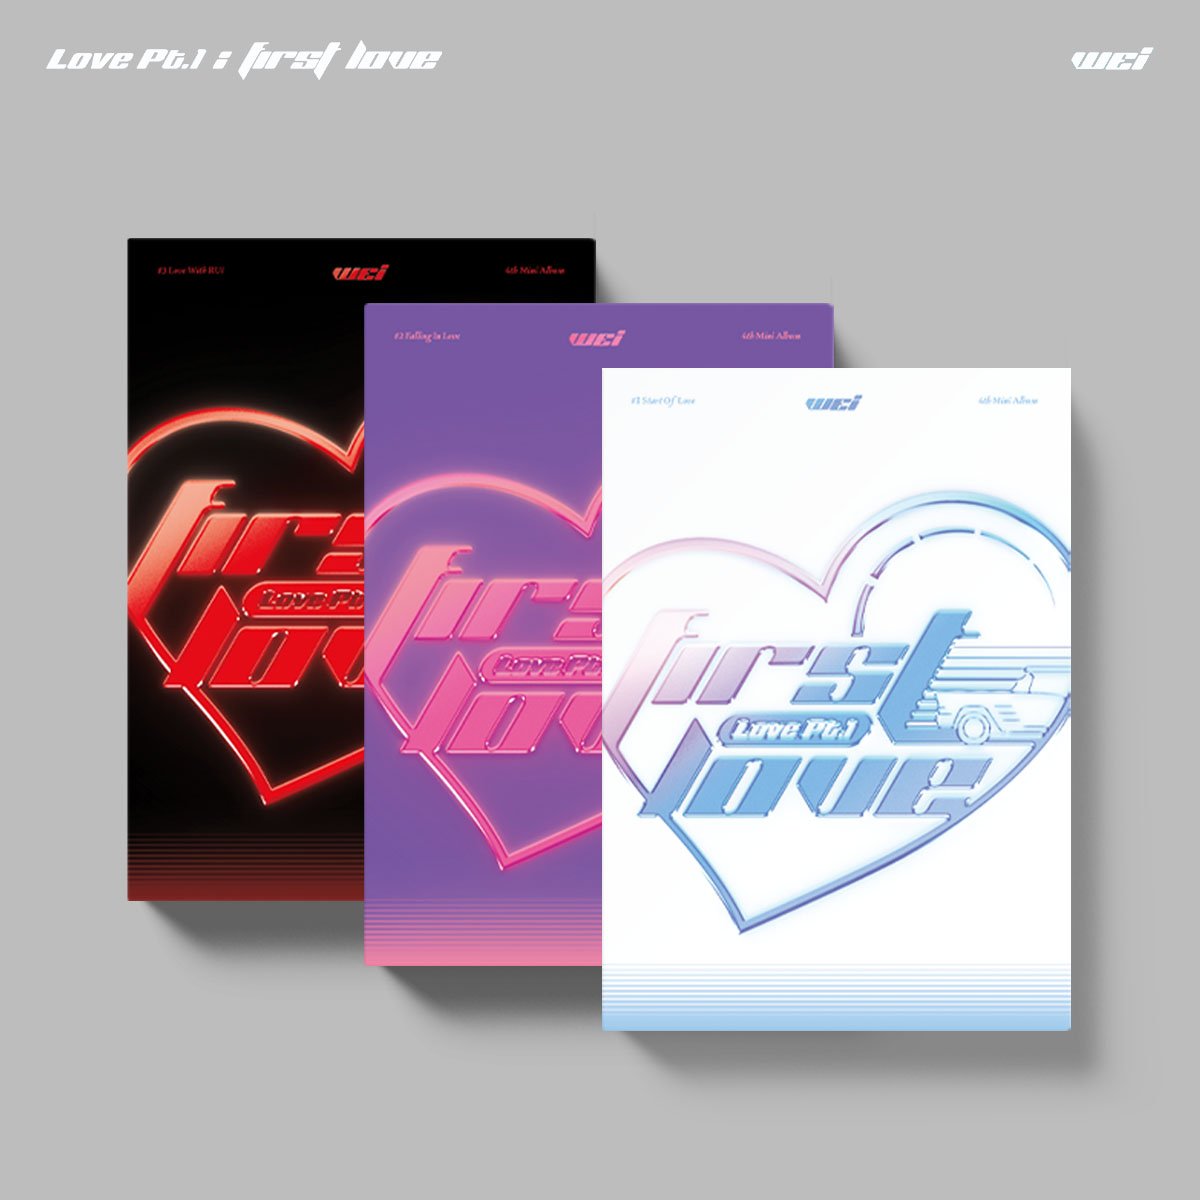 WEi 4th Mini Album Love Part. 1: First Love - Start Of Love / Falling in Love / Love With RUi Version